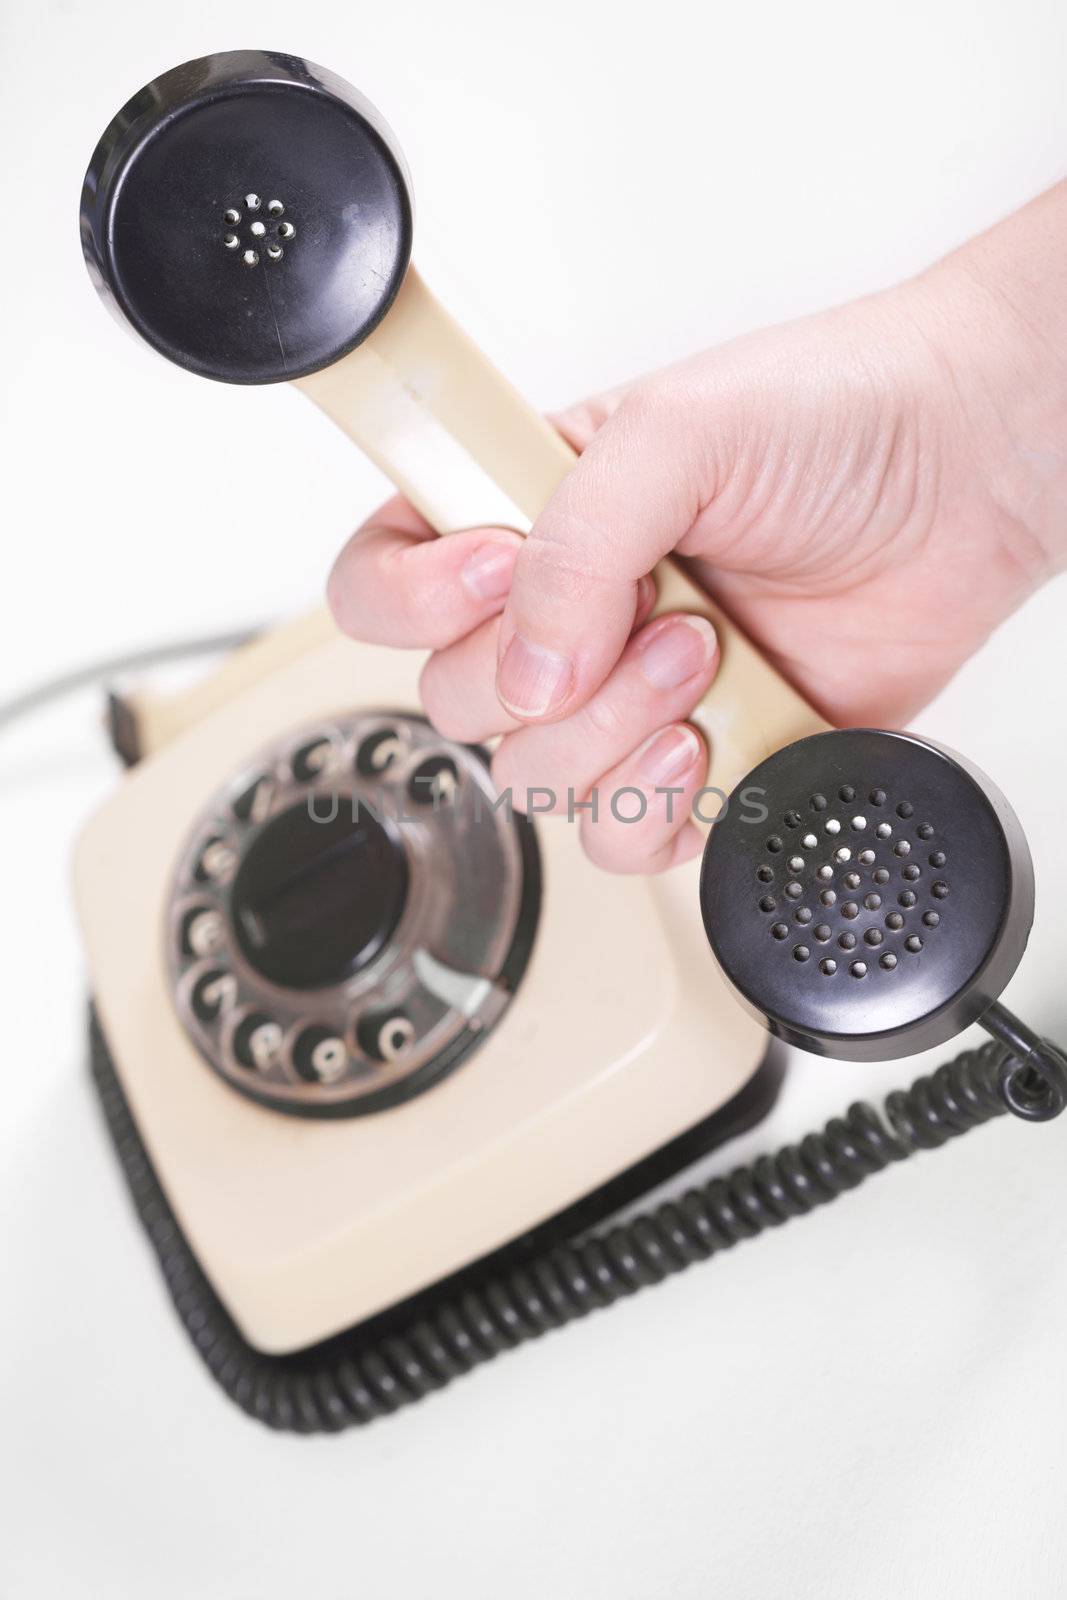 Telephone receiver by petrkurgan